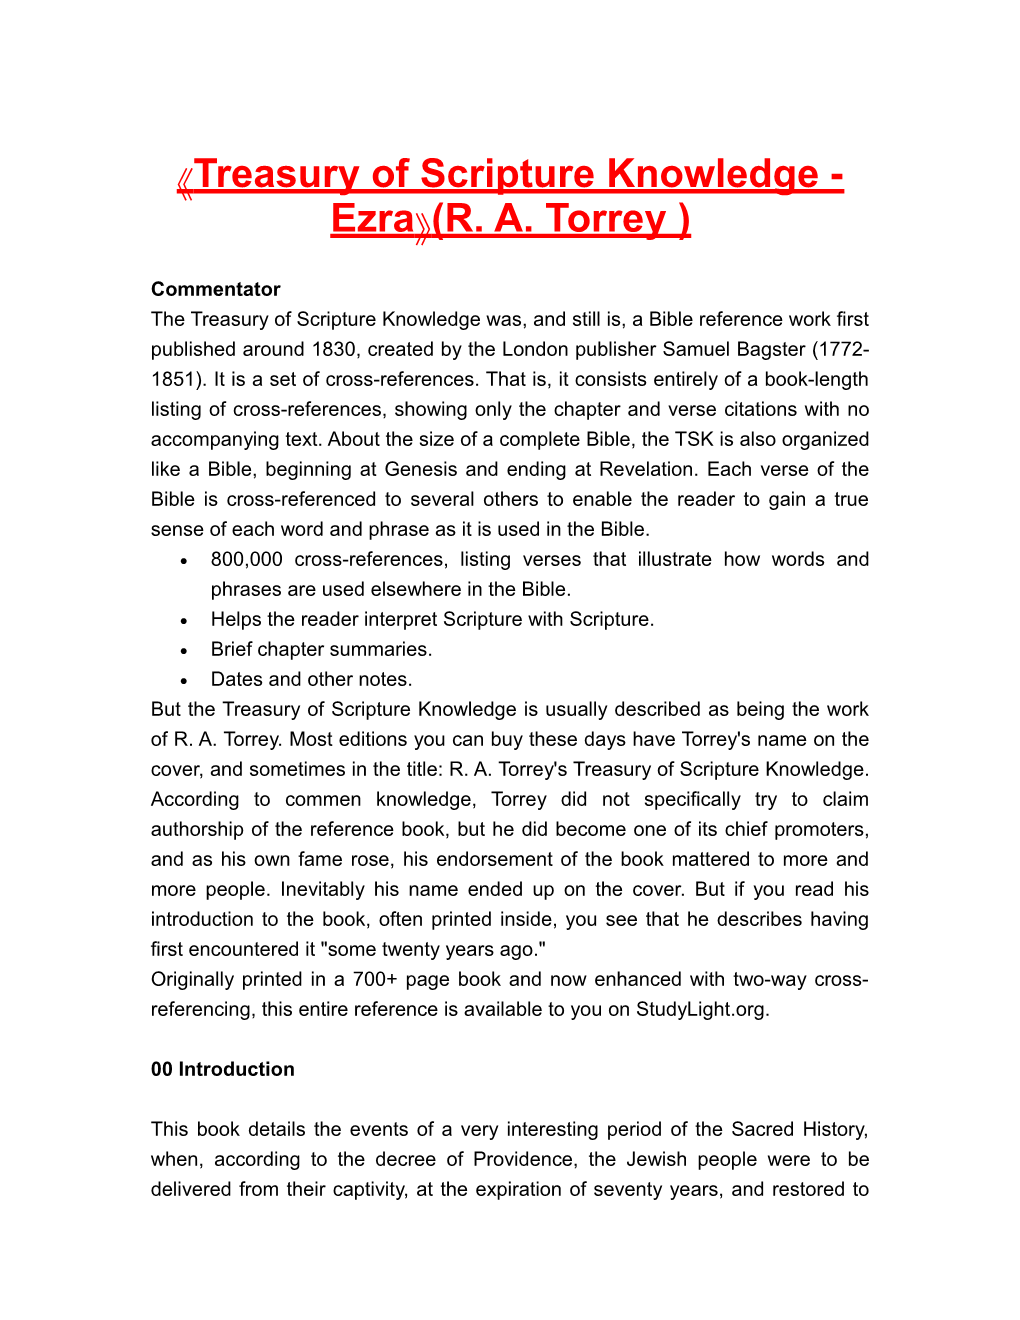 Treasuryofscriptureknowledge - Ezra (R. A.Torrey)